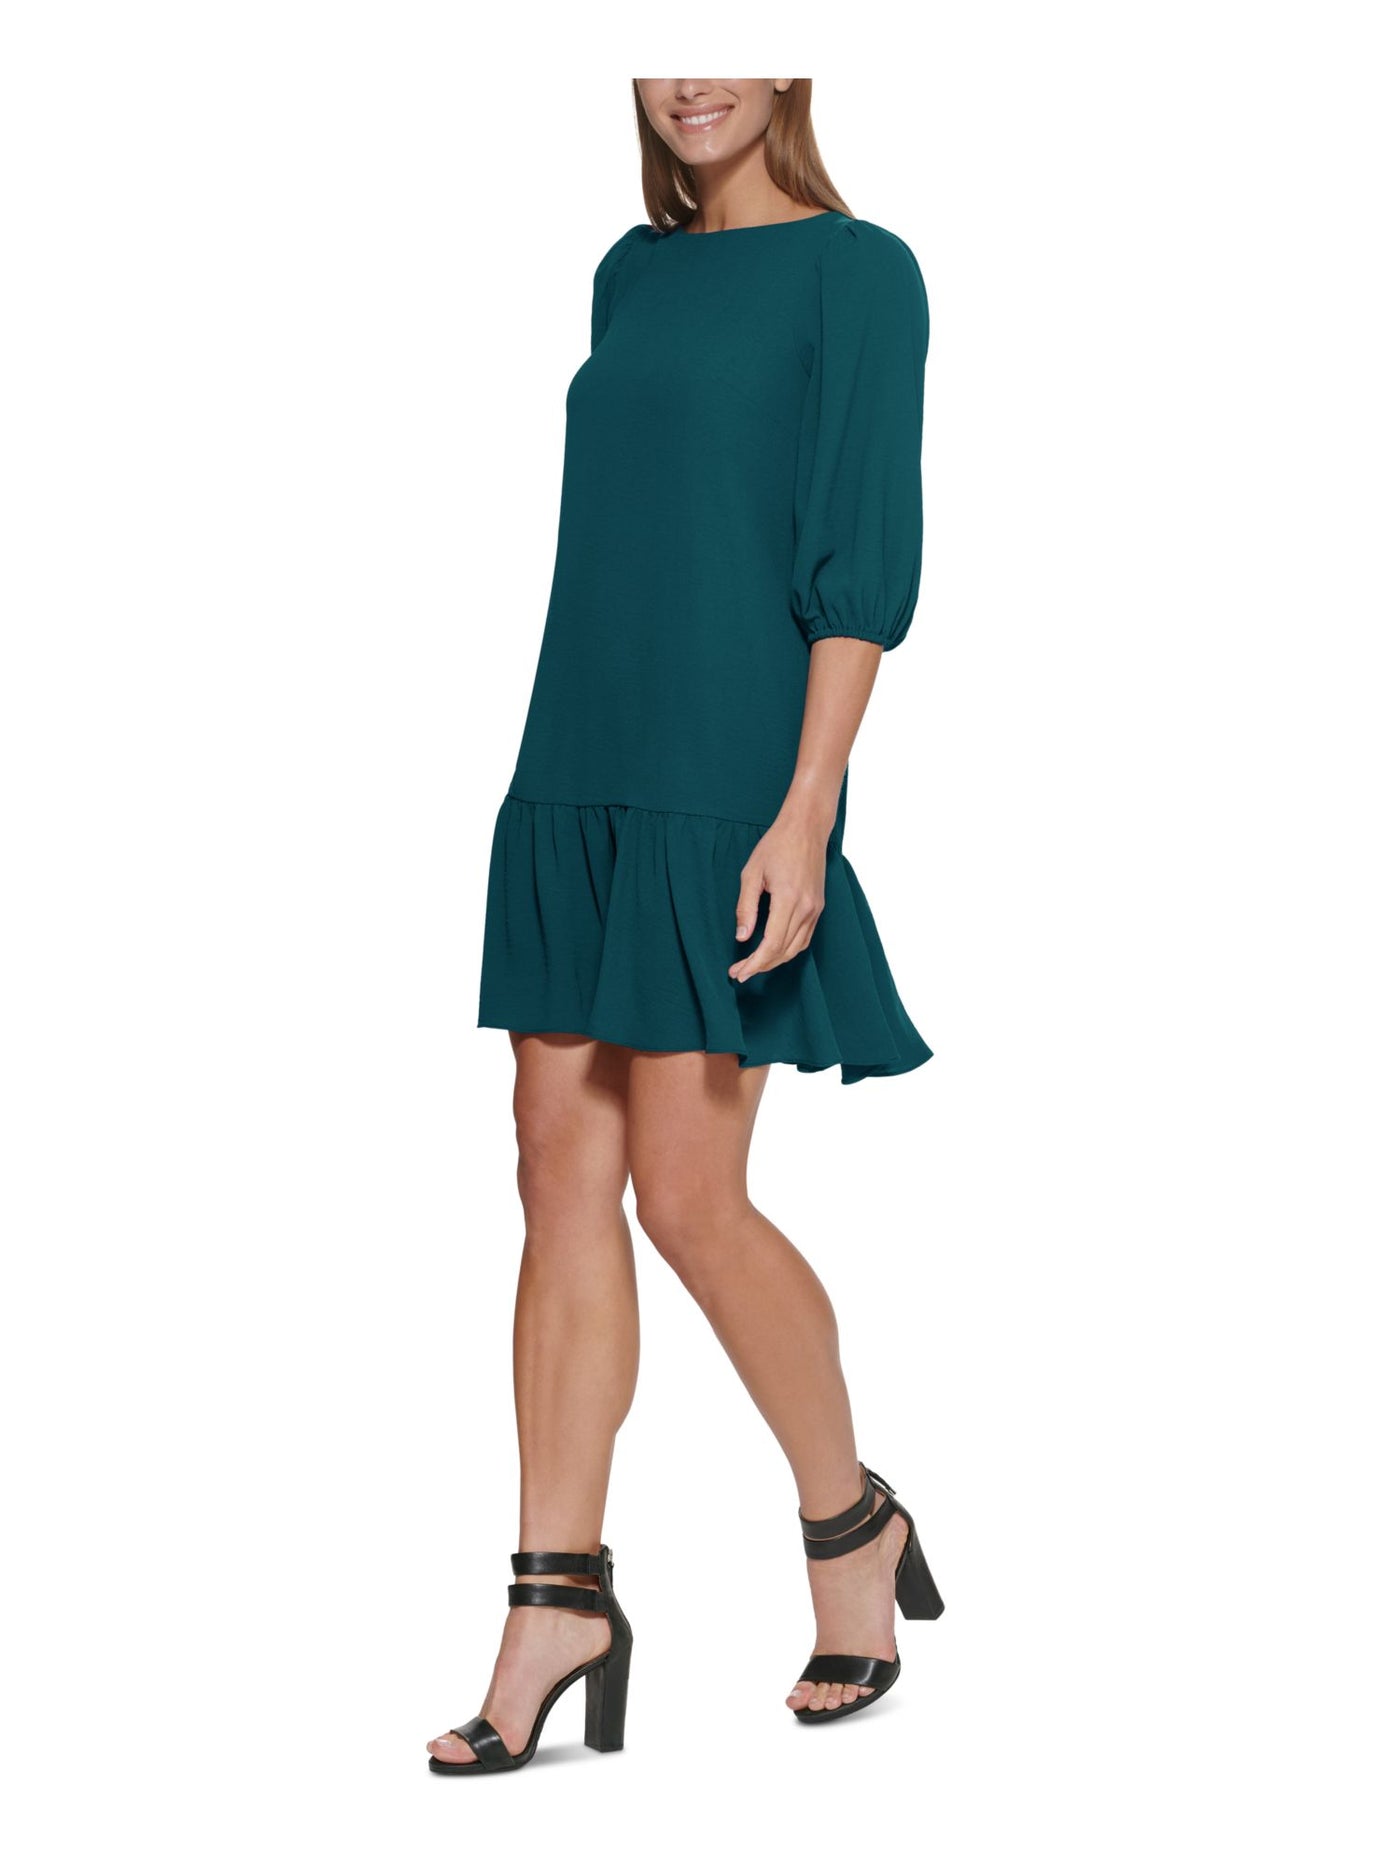 DKNY Womens Green Textured Zippered Ruffled Hem Elbow Sleeve Jewel Neck Above The Knee Wear To Work Shift Dress 8